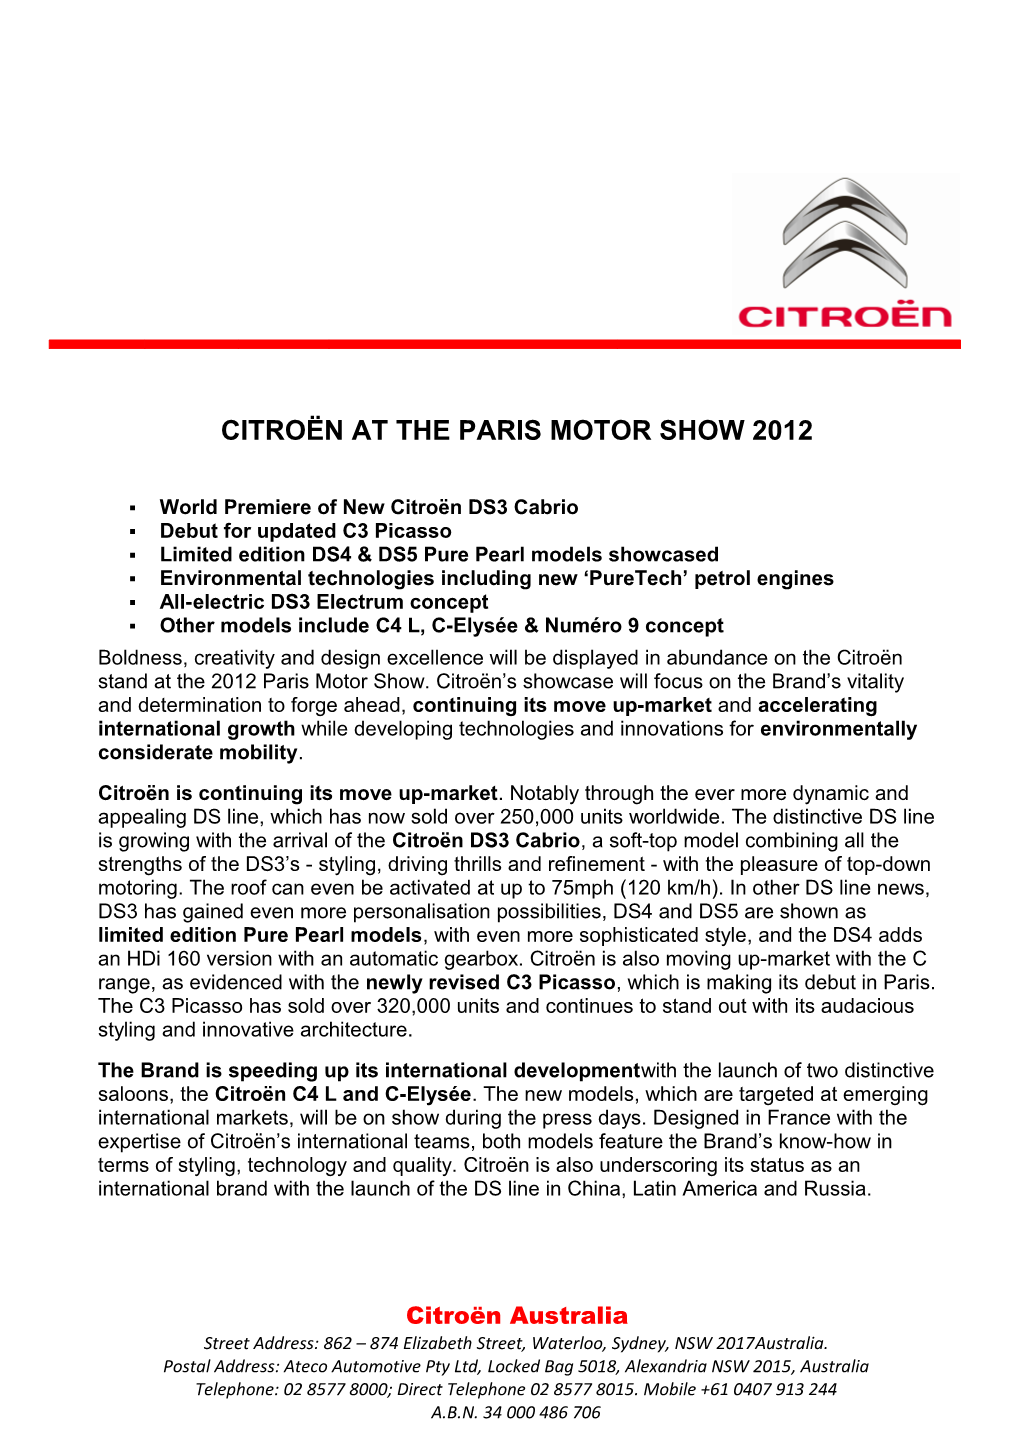 Citroën at the Paris Motor Show 2012